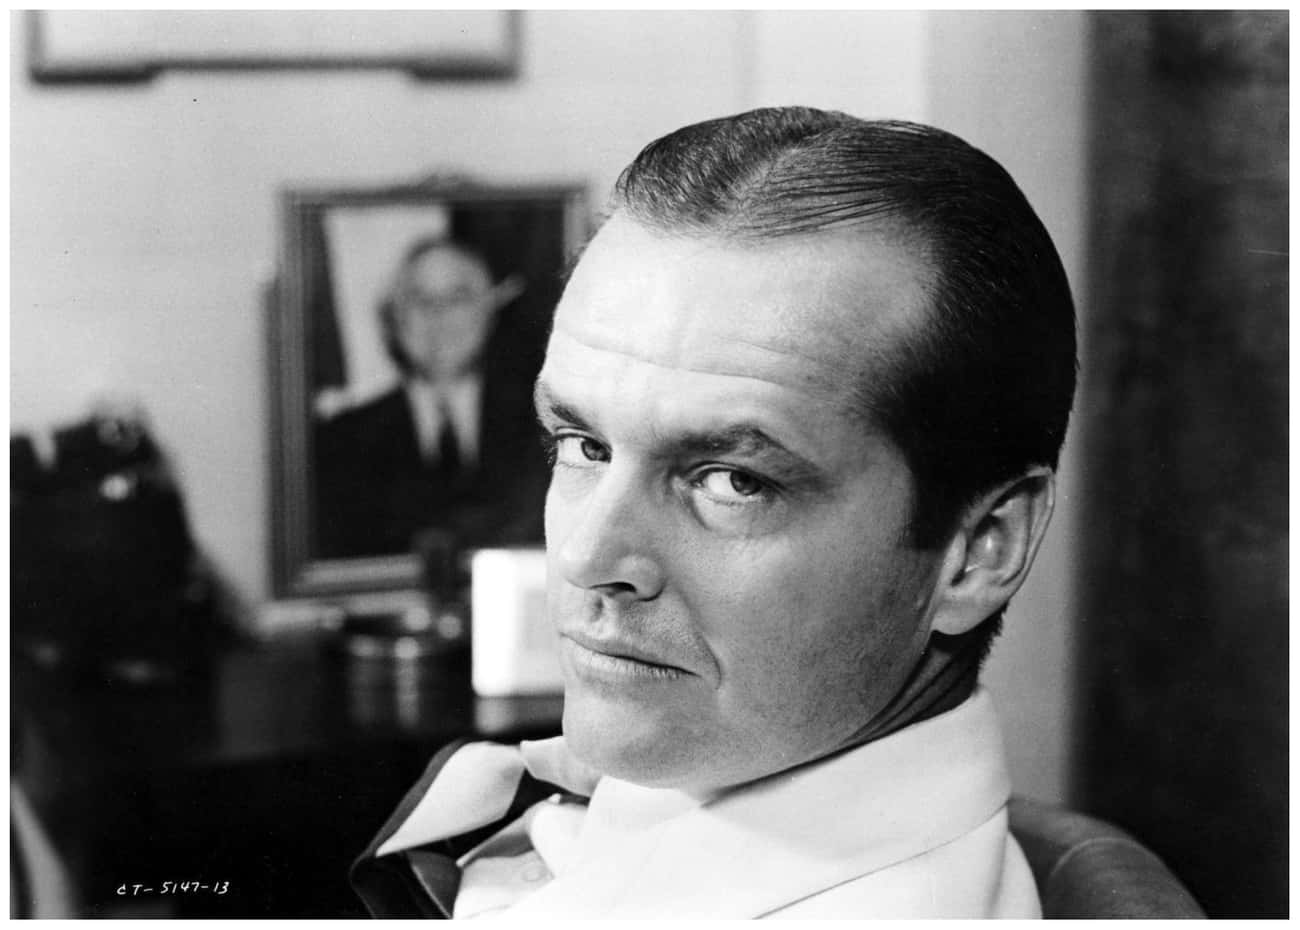 Young Jack Nicholson Closeup Side Profile Shot